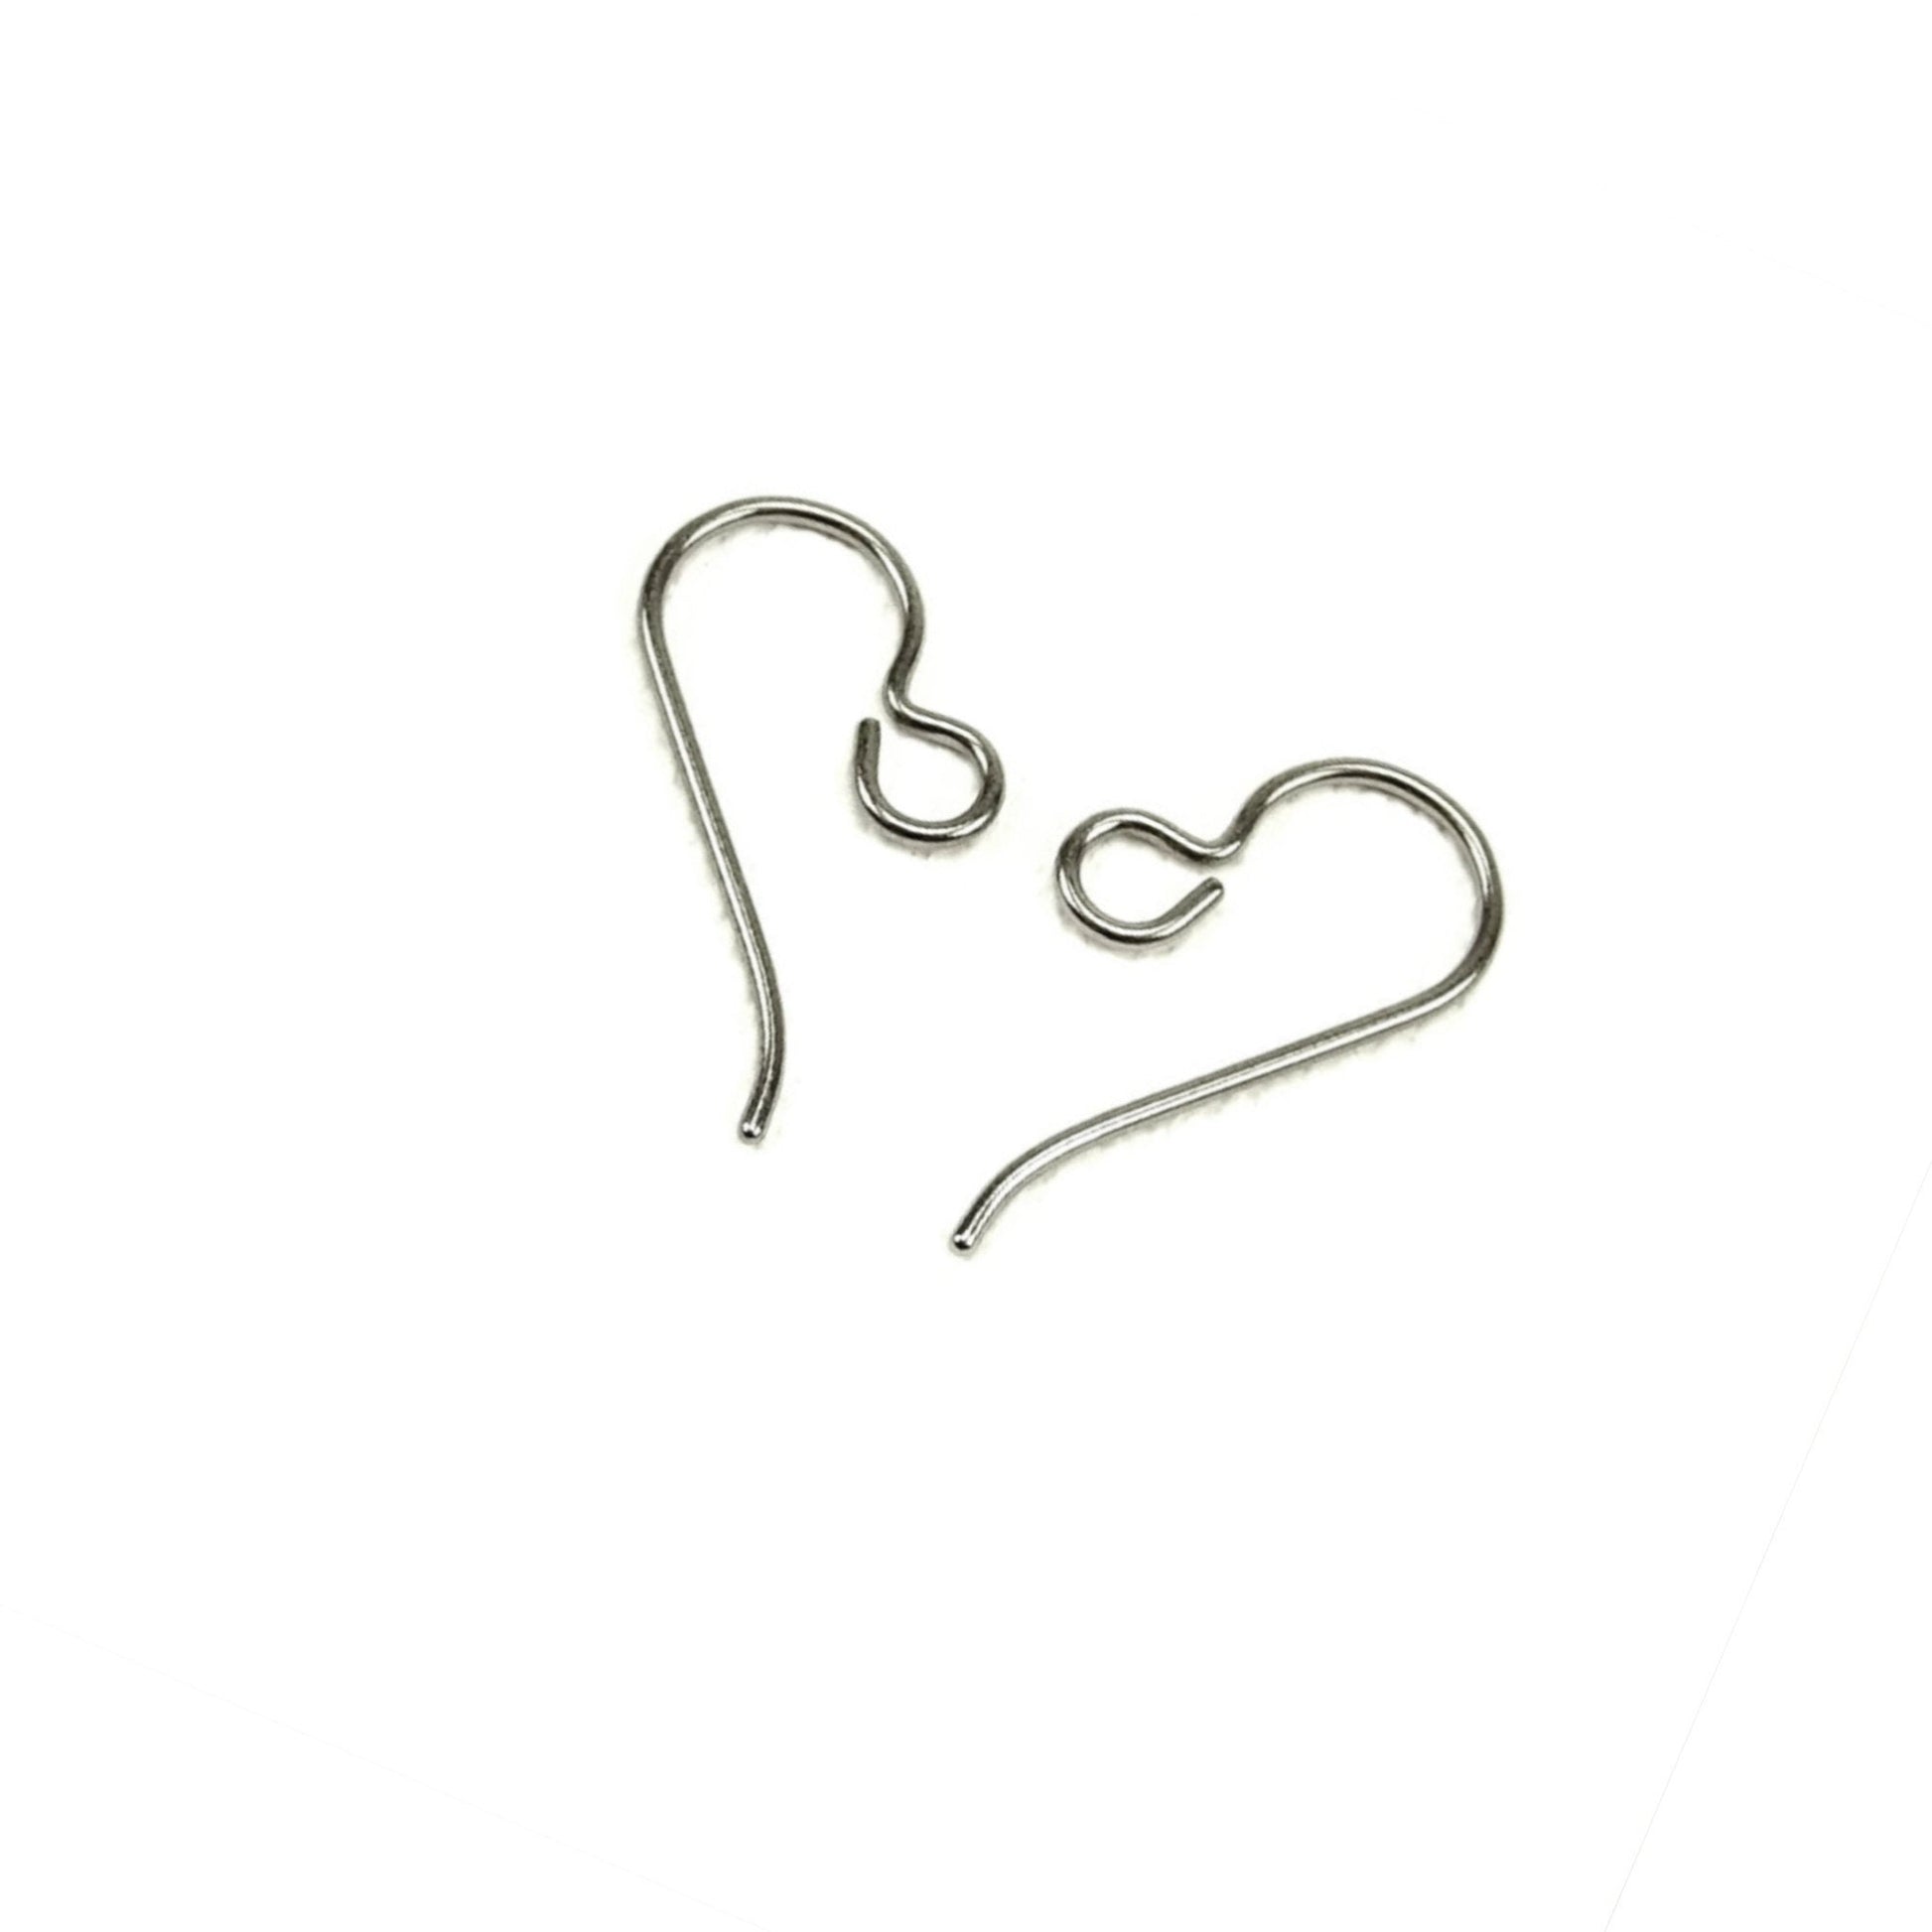 Niobium Earwire Hooks, French Hooks Pure Niobium Wire, Nickel Free Ear Wires, Hypoallergenic Ear Hooks, DIY Replacement Earring Hooks